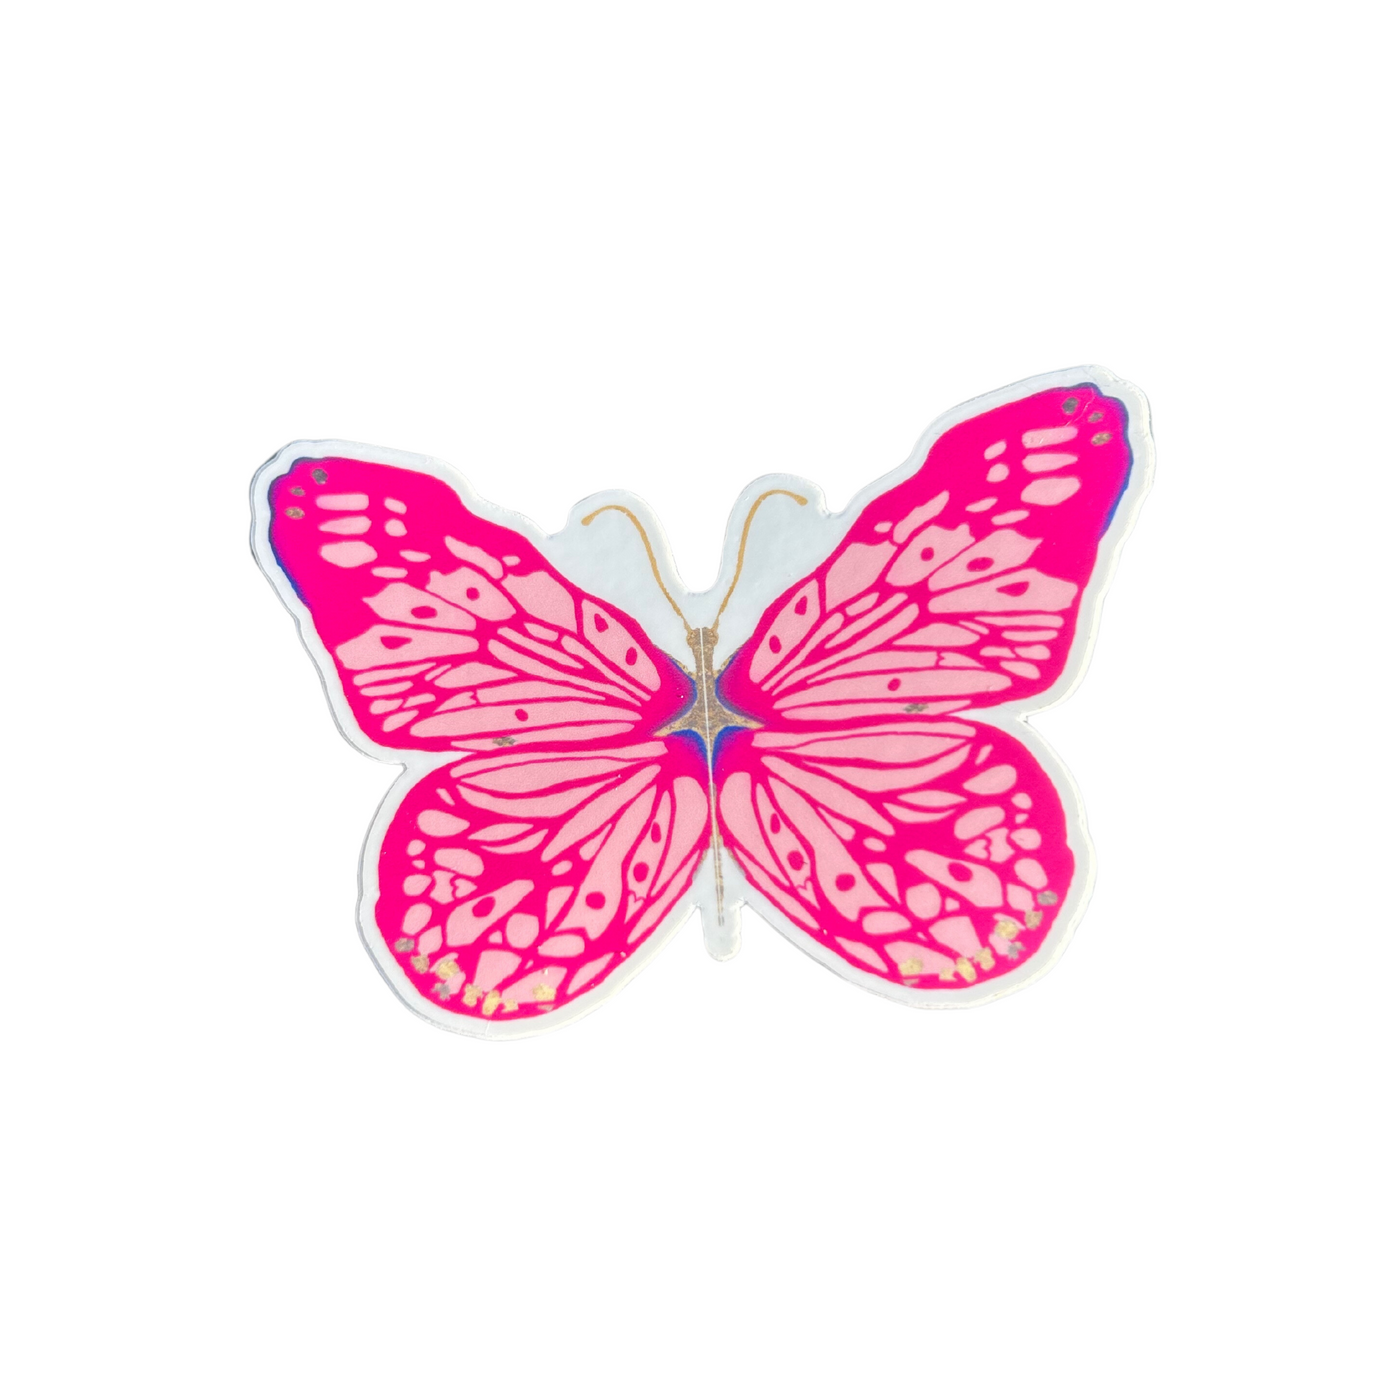 "Hot Pink Butterfly" Sticker